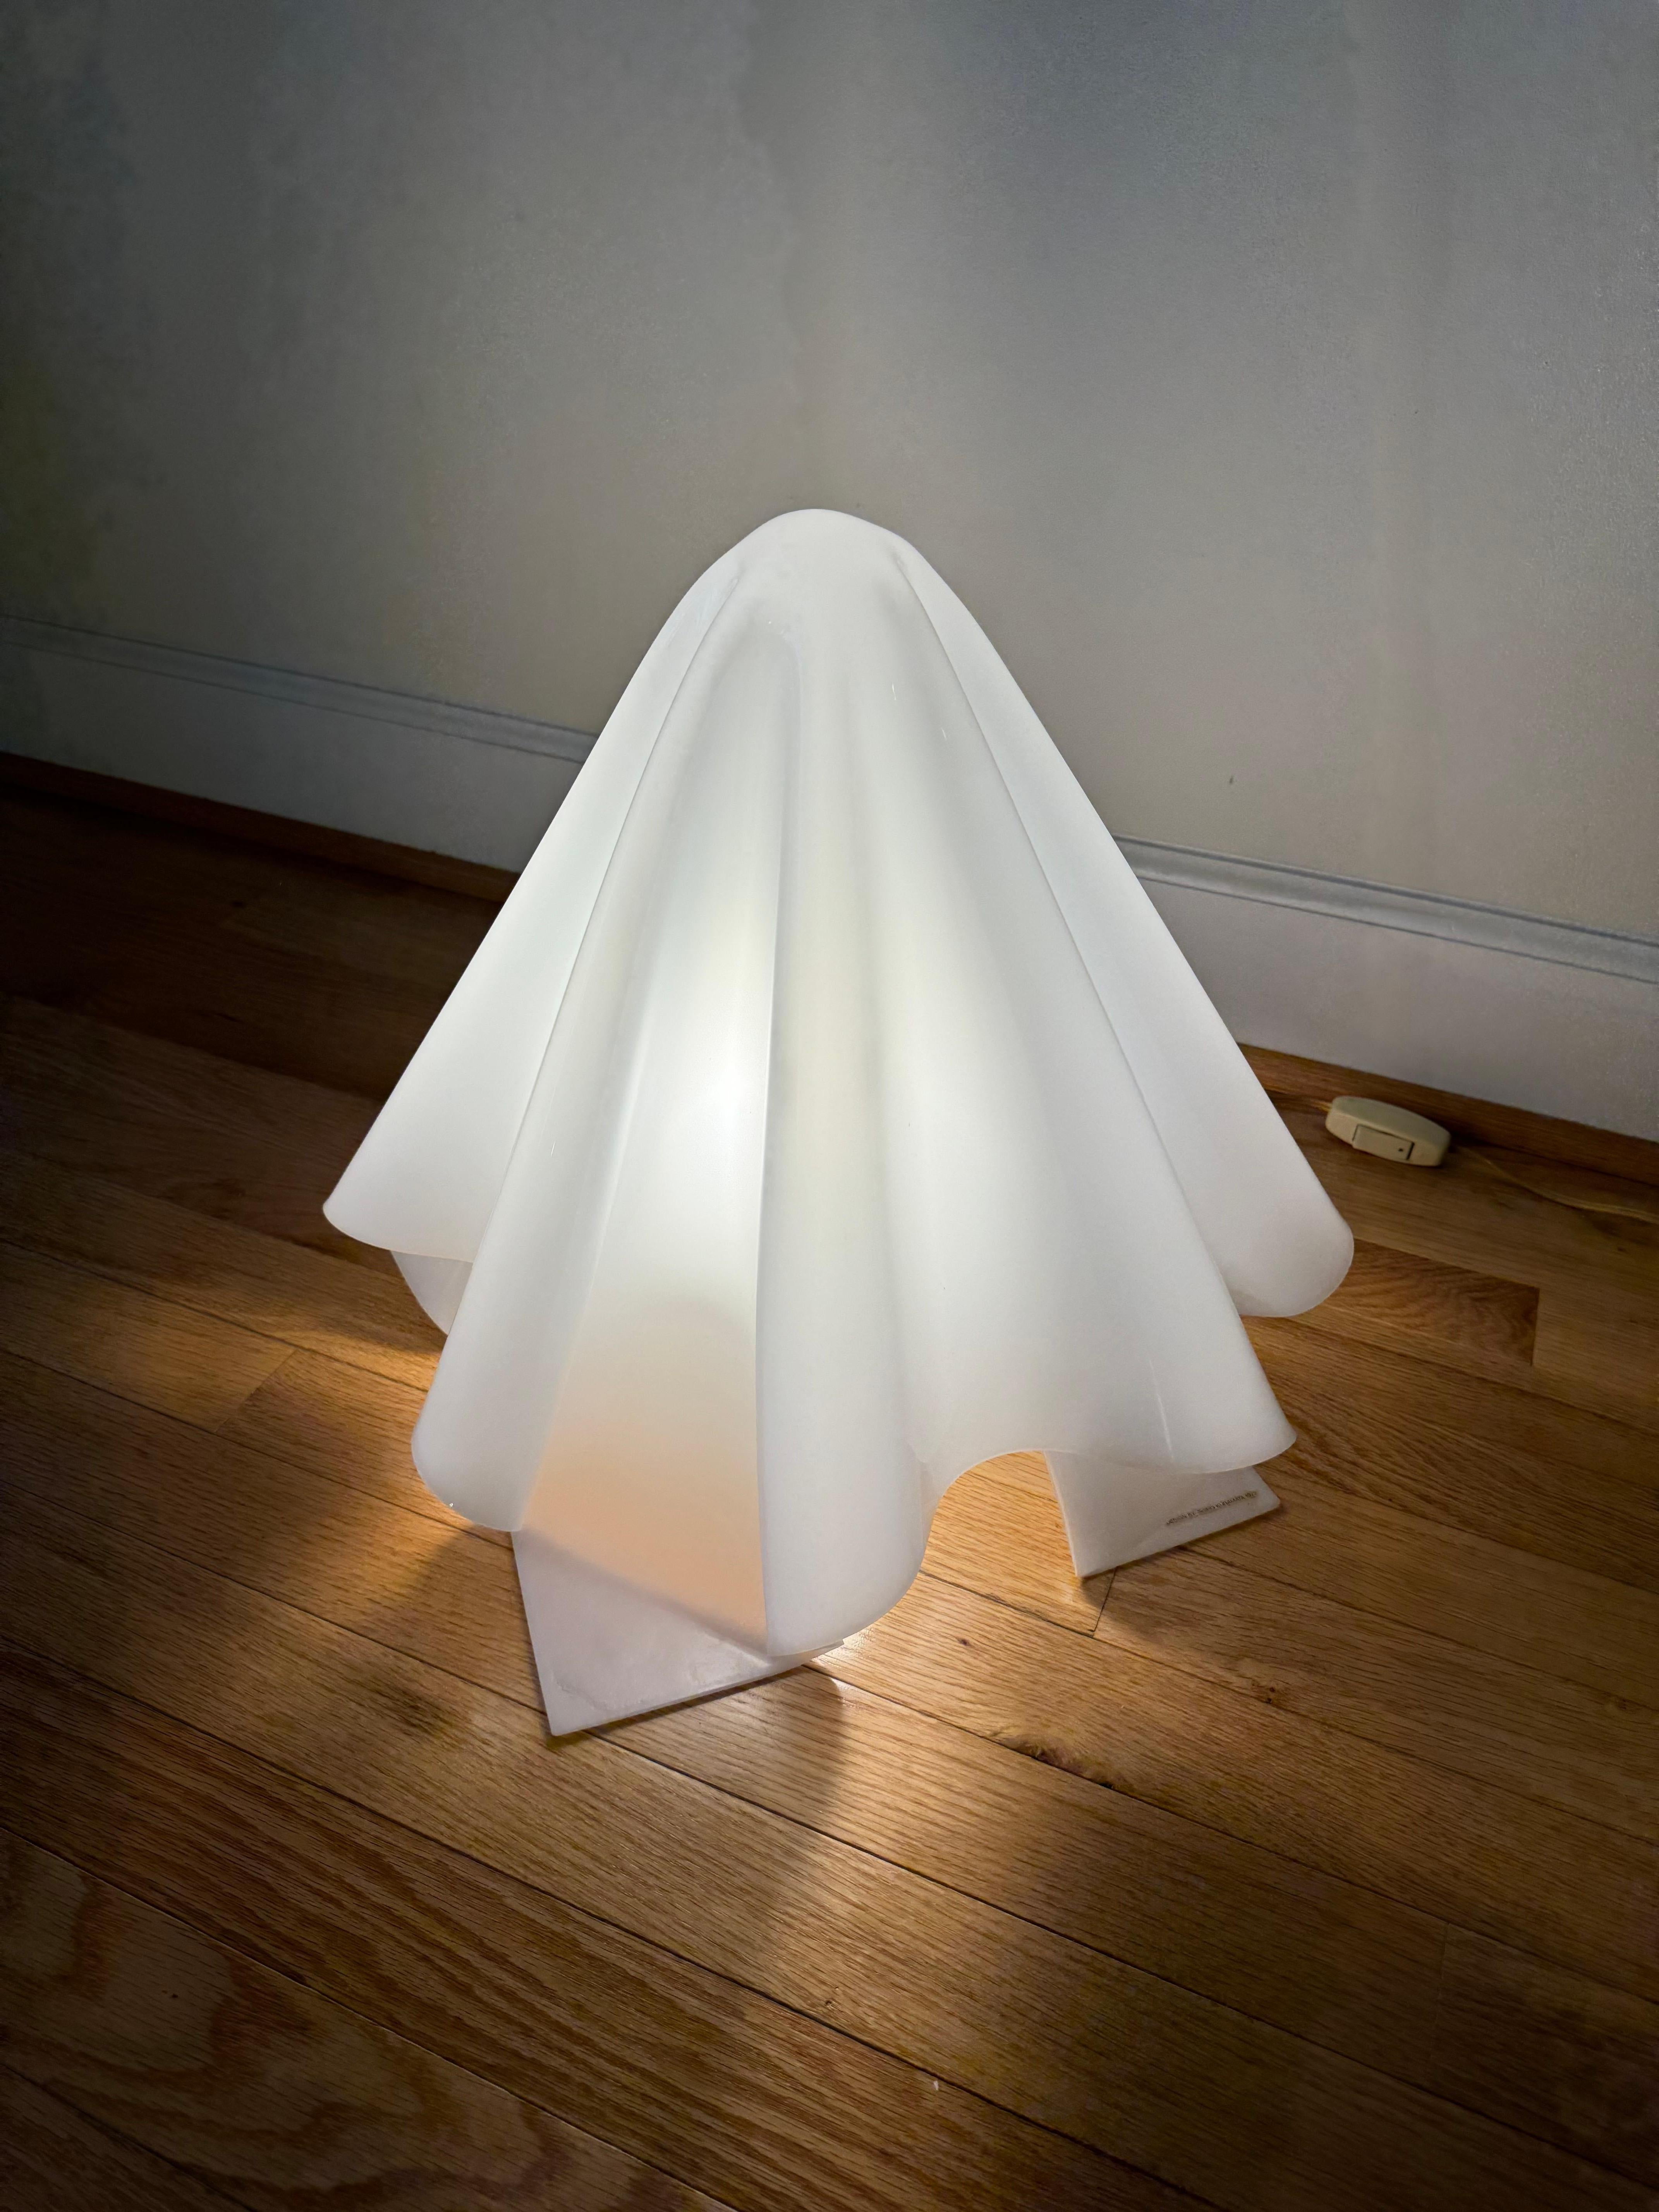 Late 20th Century Rare early K-series (Oba- Q/Ghost) table lamp by Shiro Kuramata (Medium size)